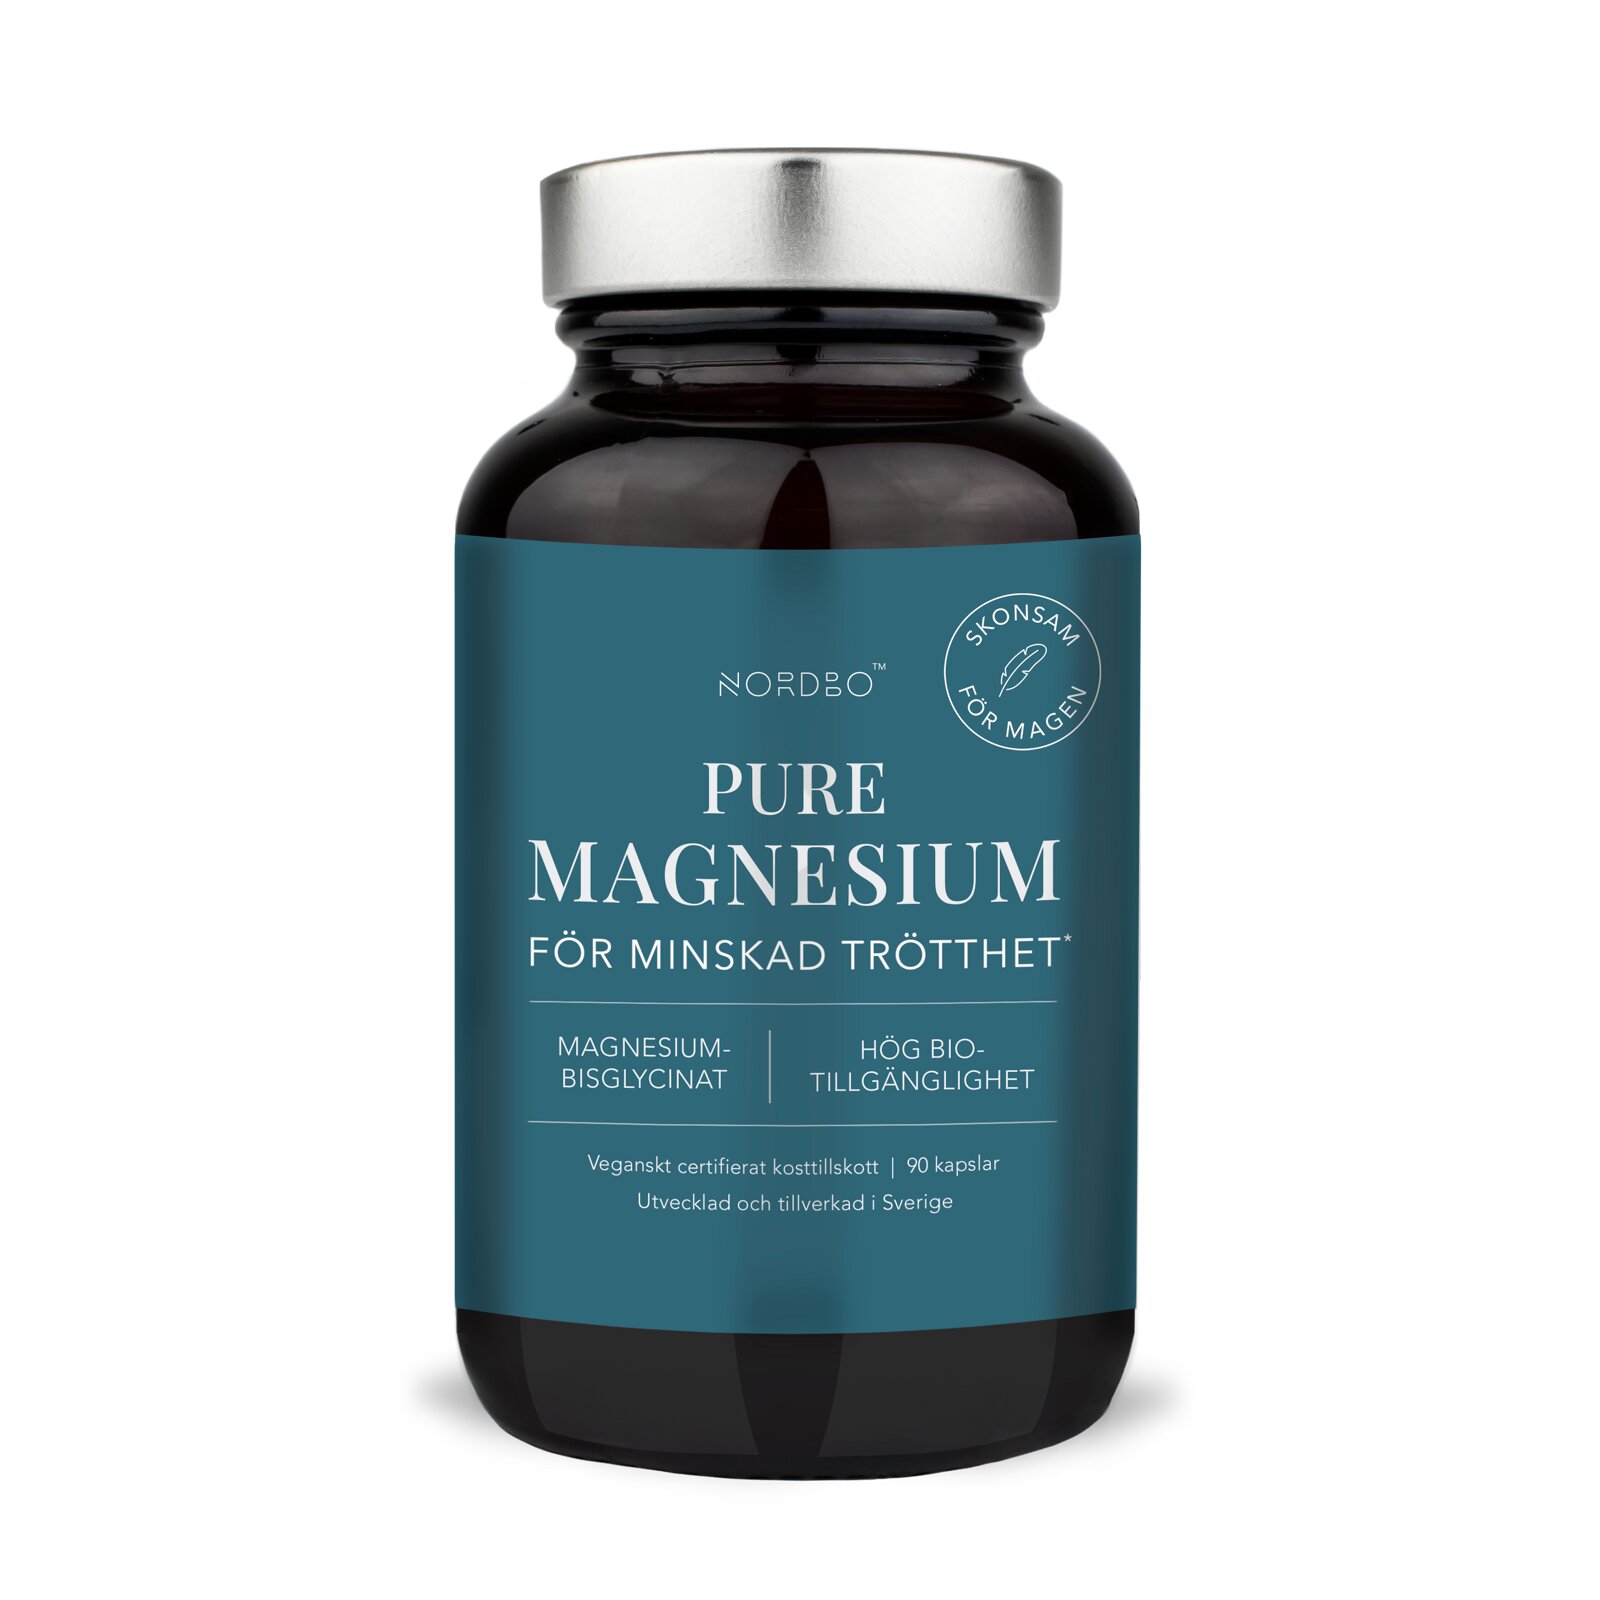 Nordbo Pure Magnesium